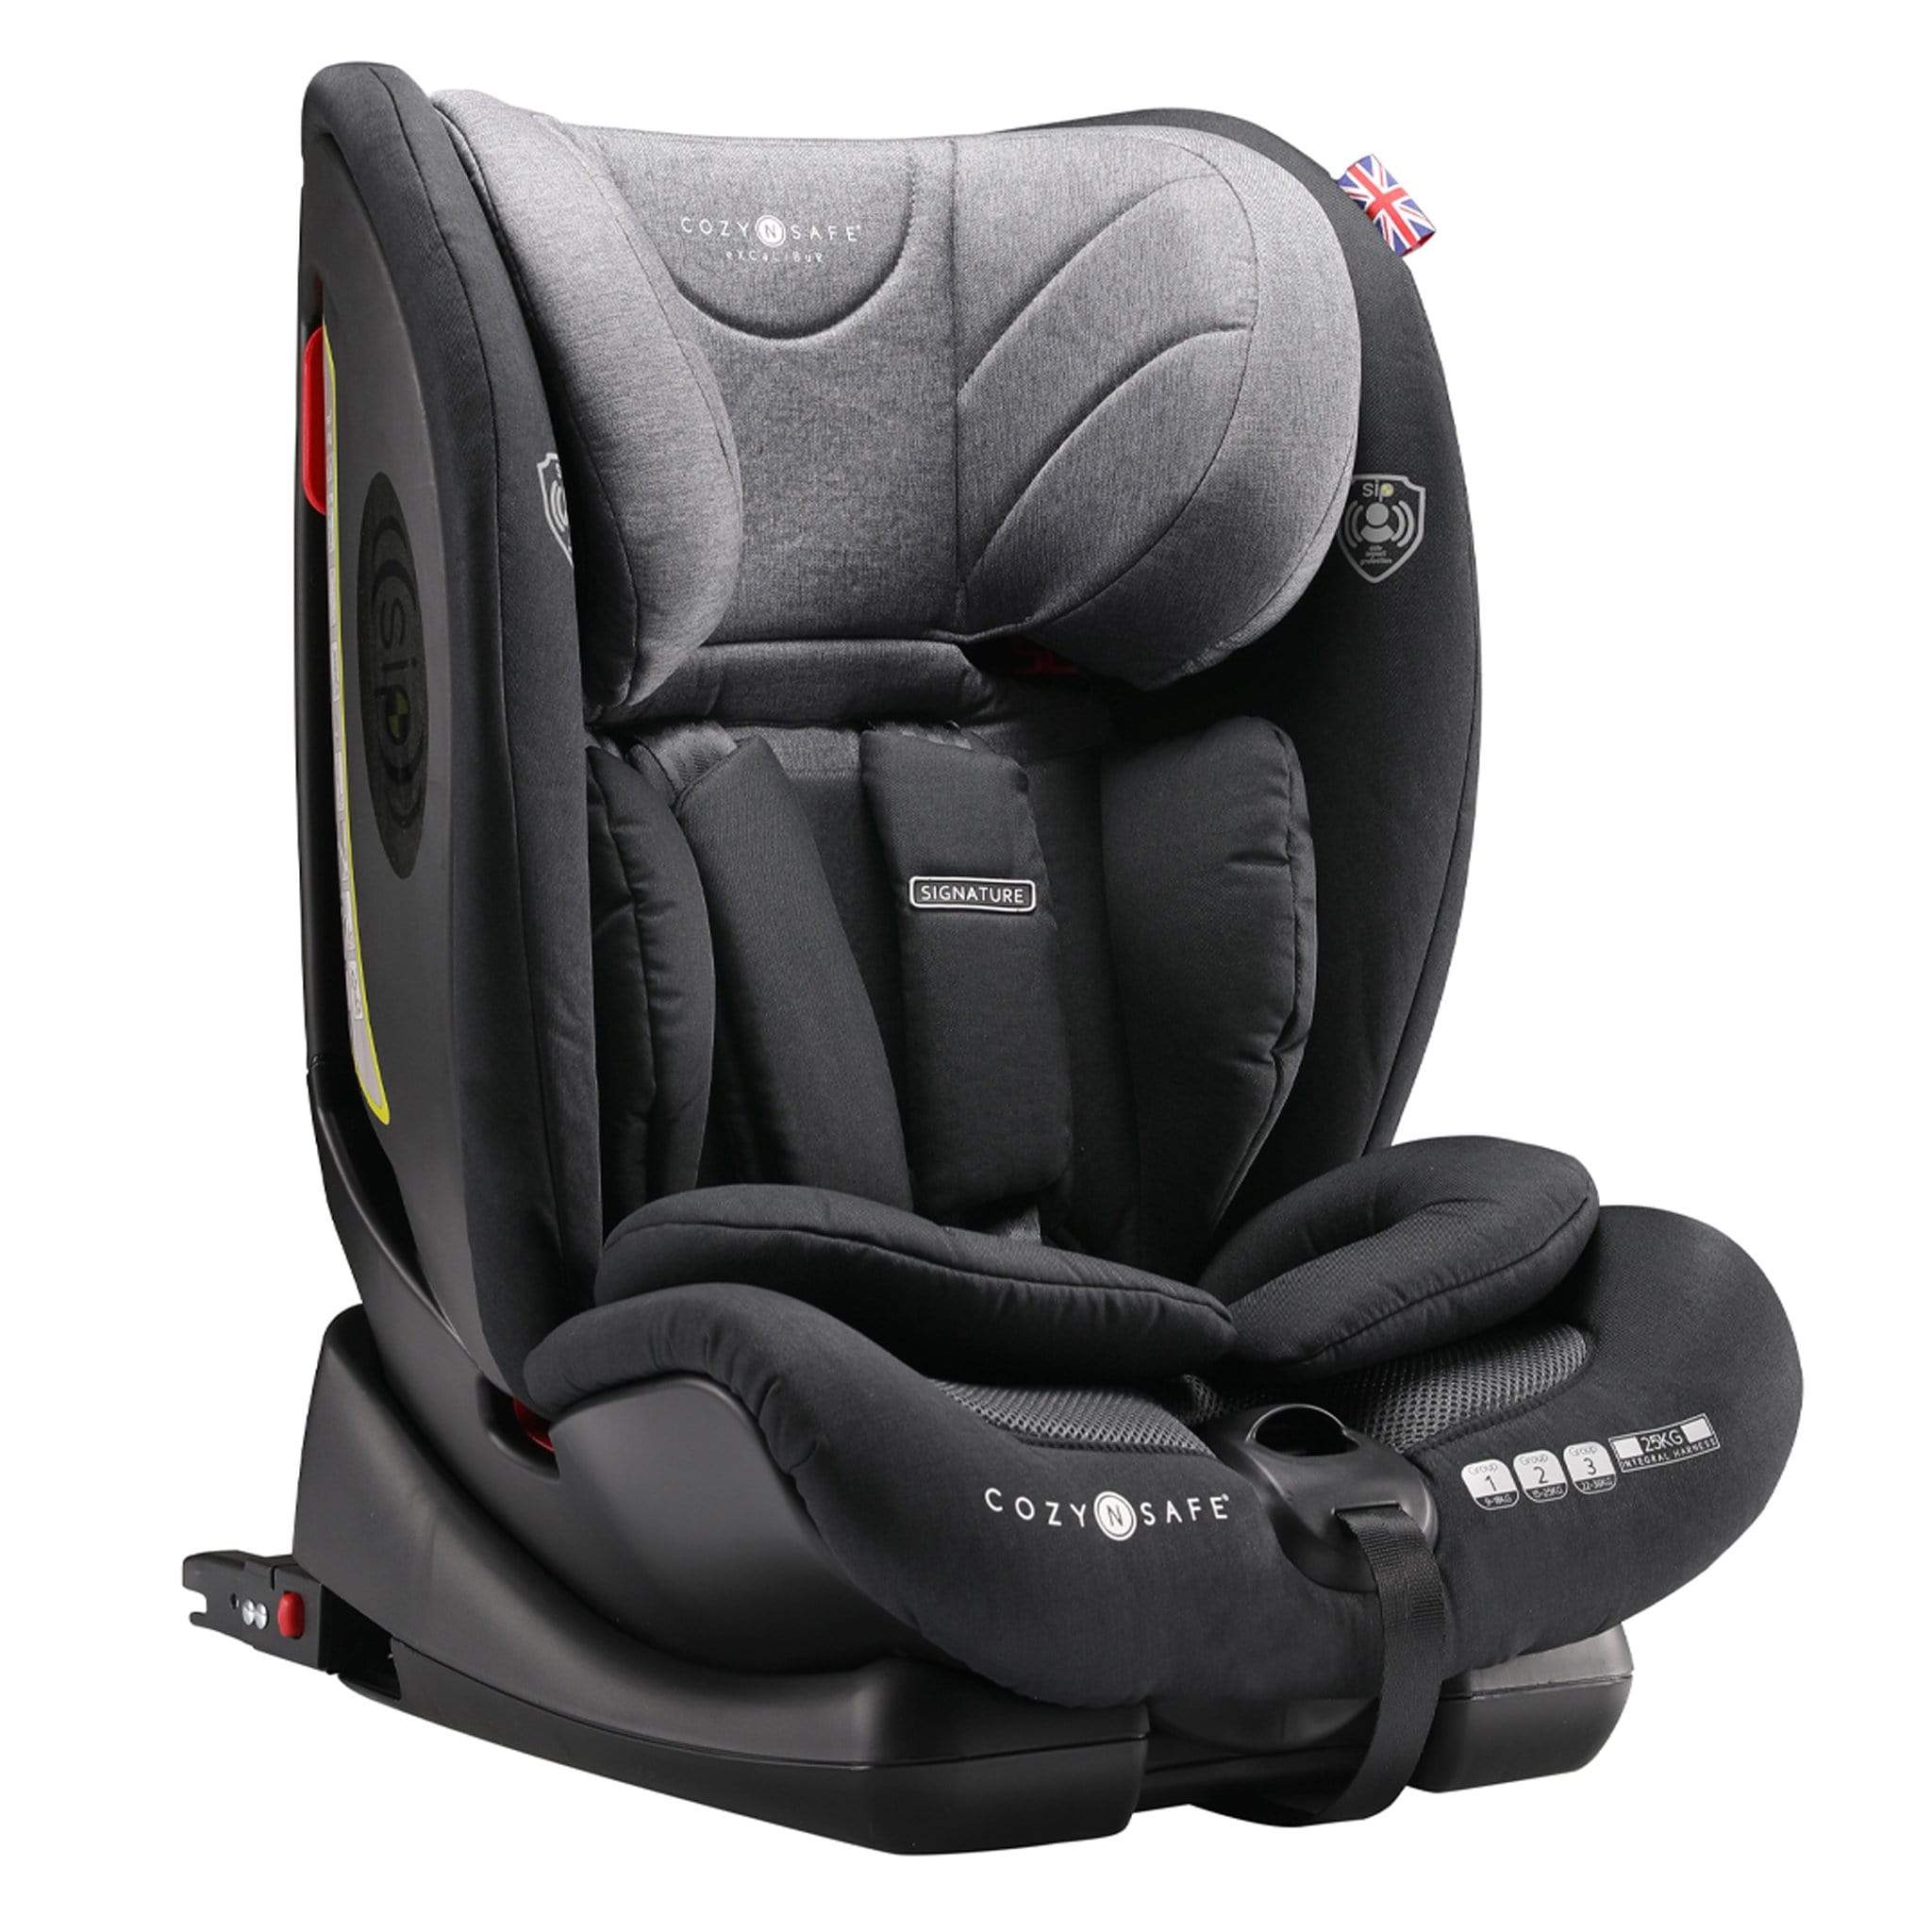 Cozy N Safe Car Seats The Cozy N Safe Excalibur Group 1/2/3 25kg Harness Car Seat in Black and Grey EST-02-01-Excalibur